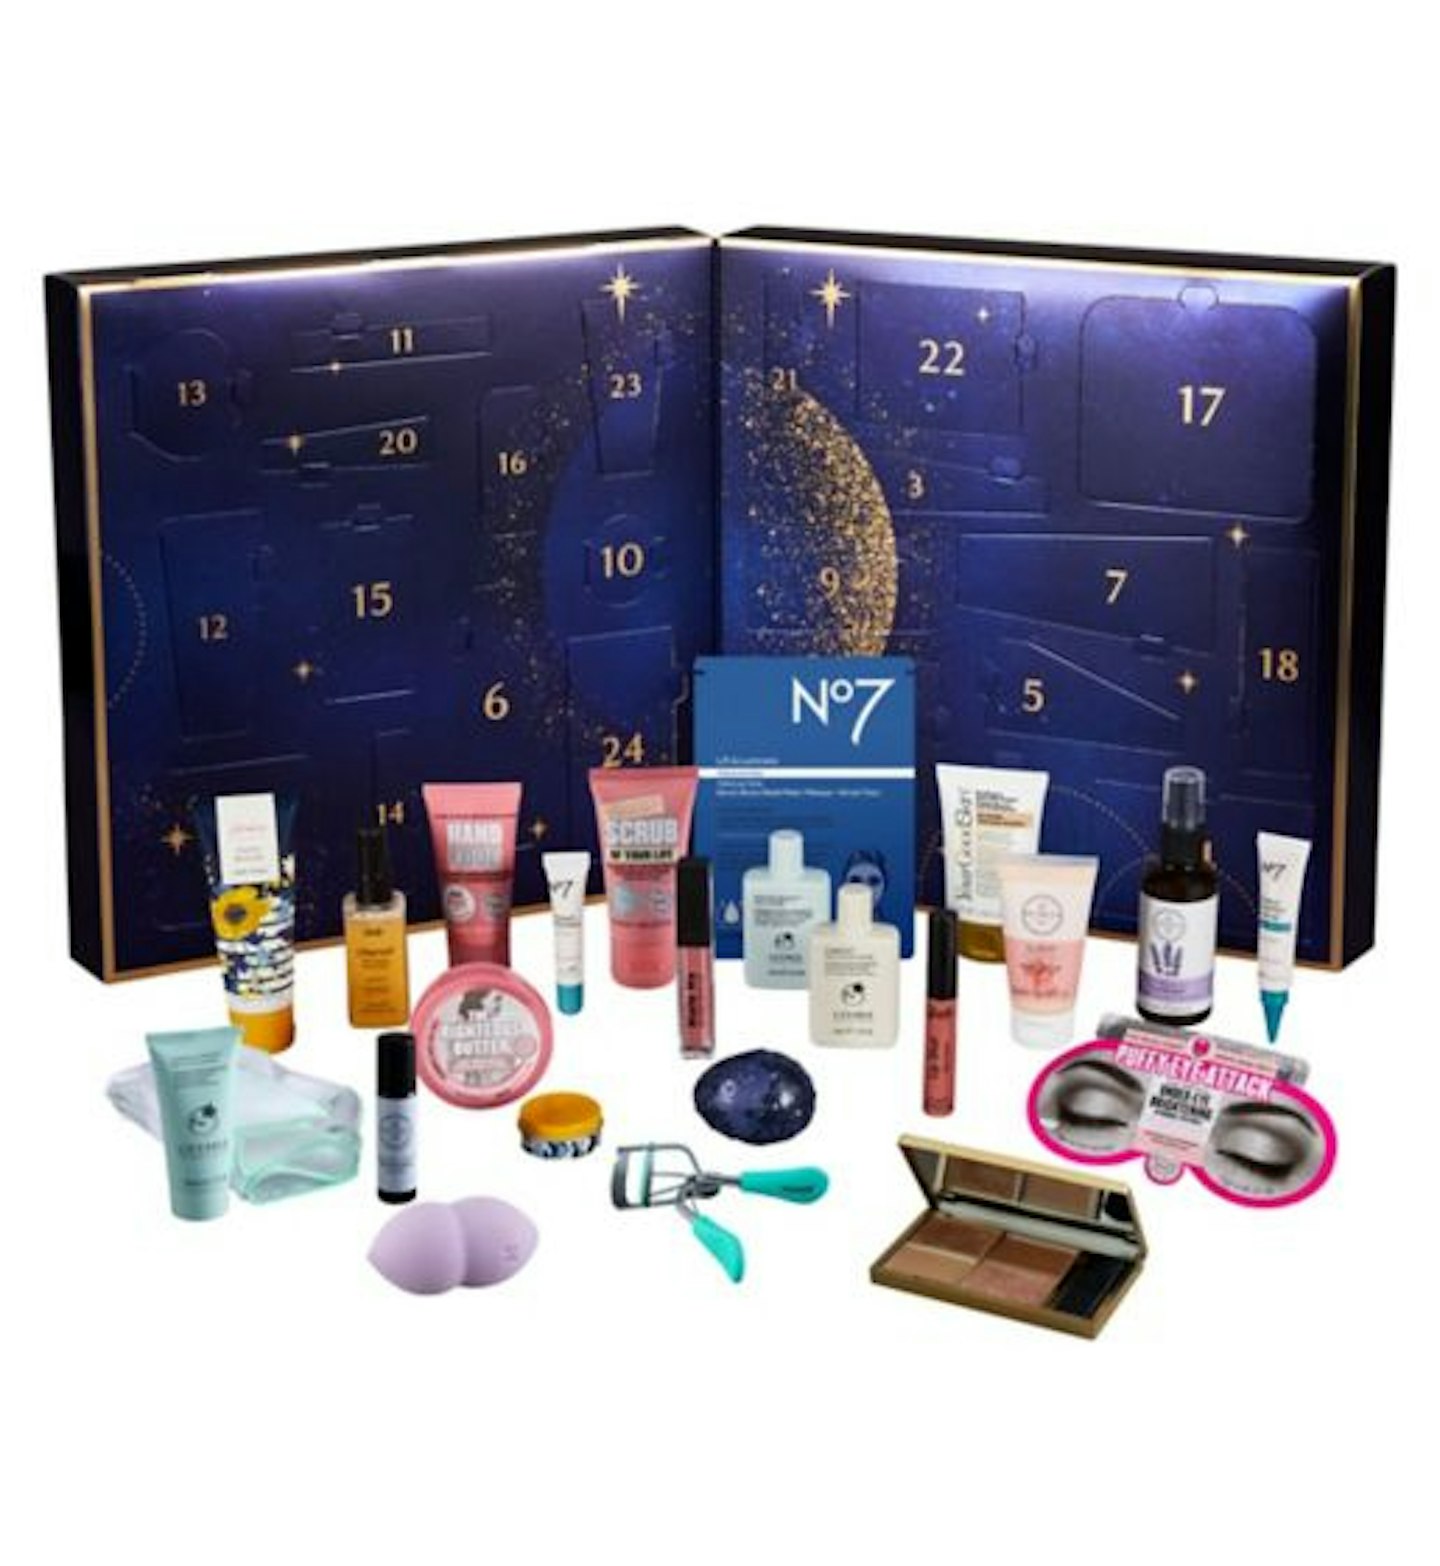 Macmillan 24 Days Of Beauty Advent Calendar